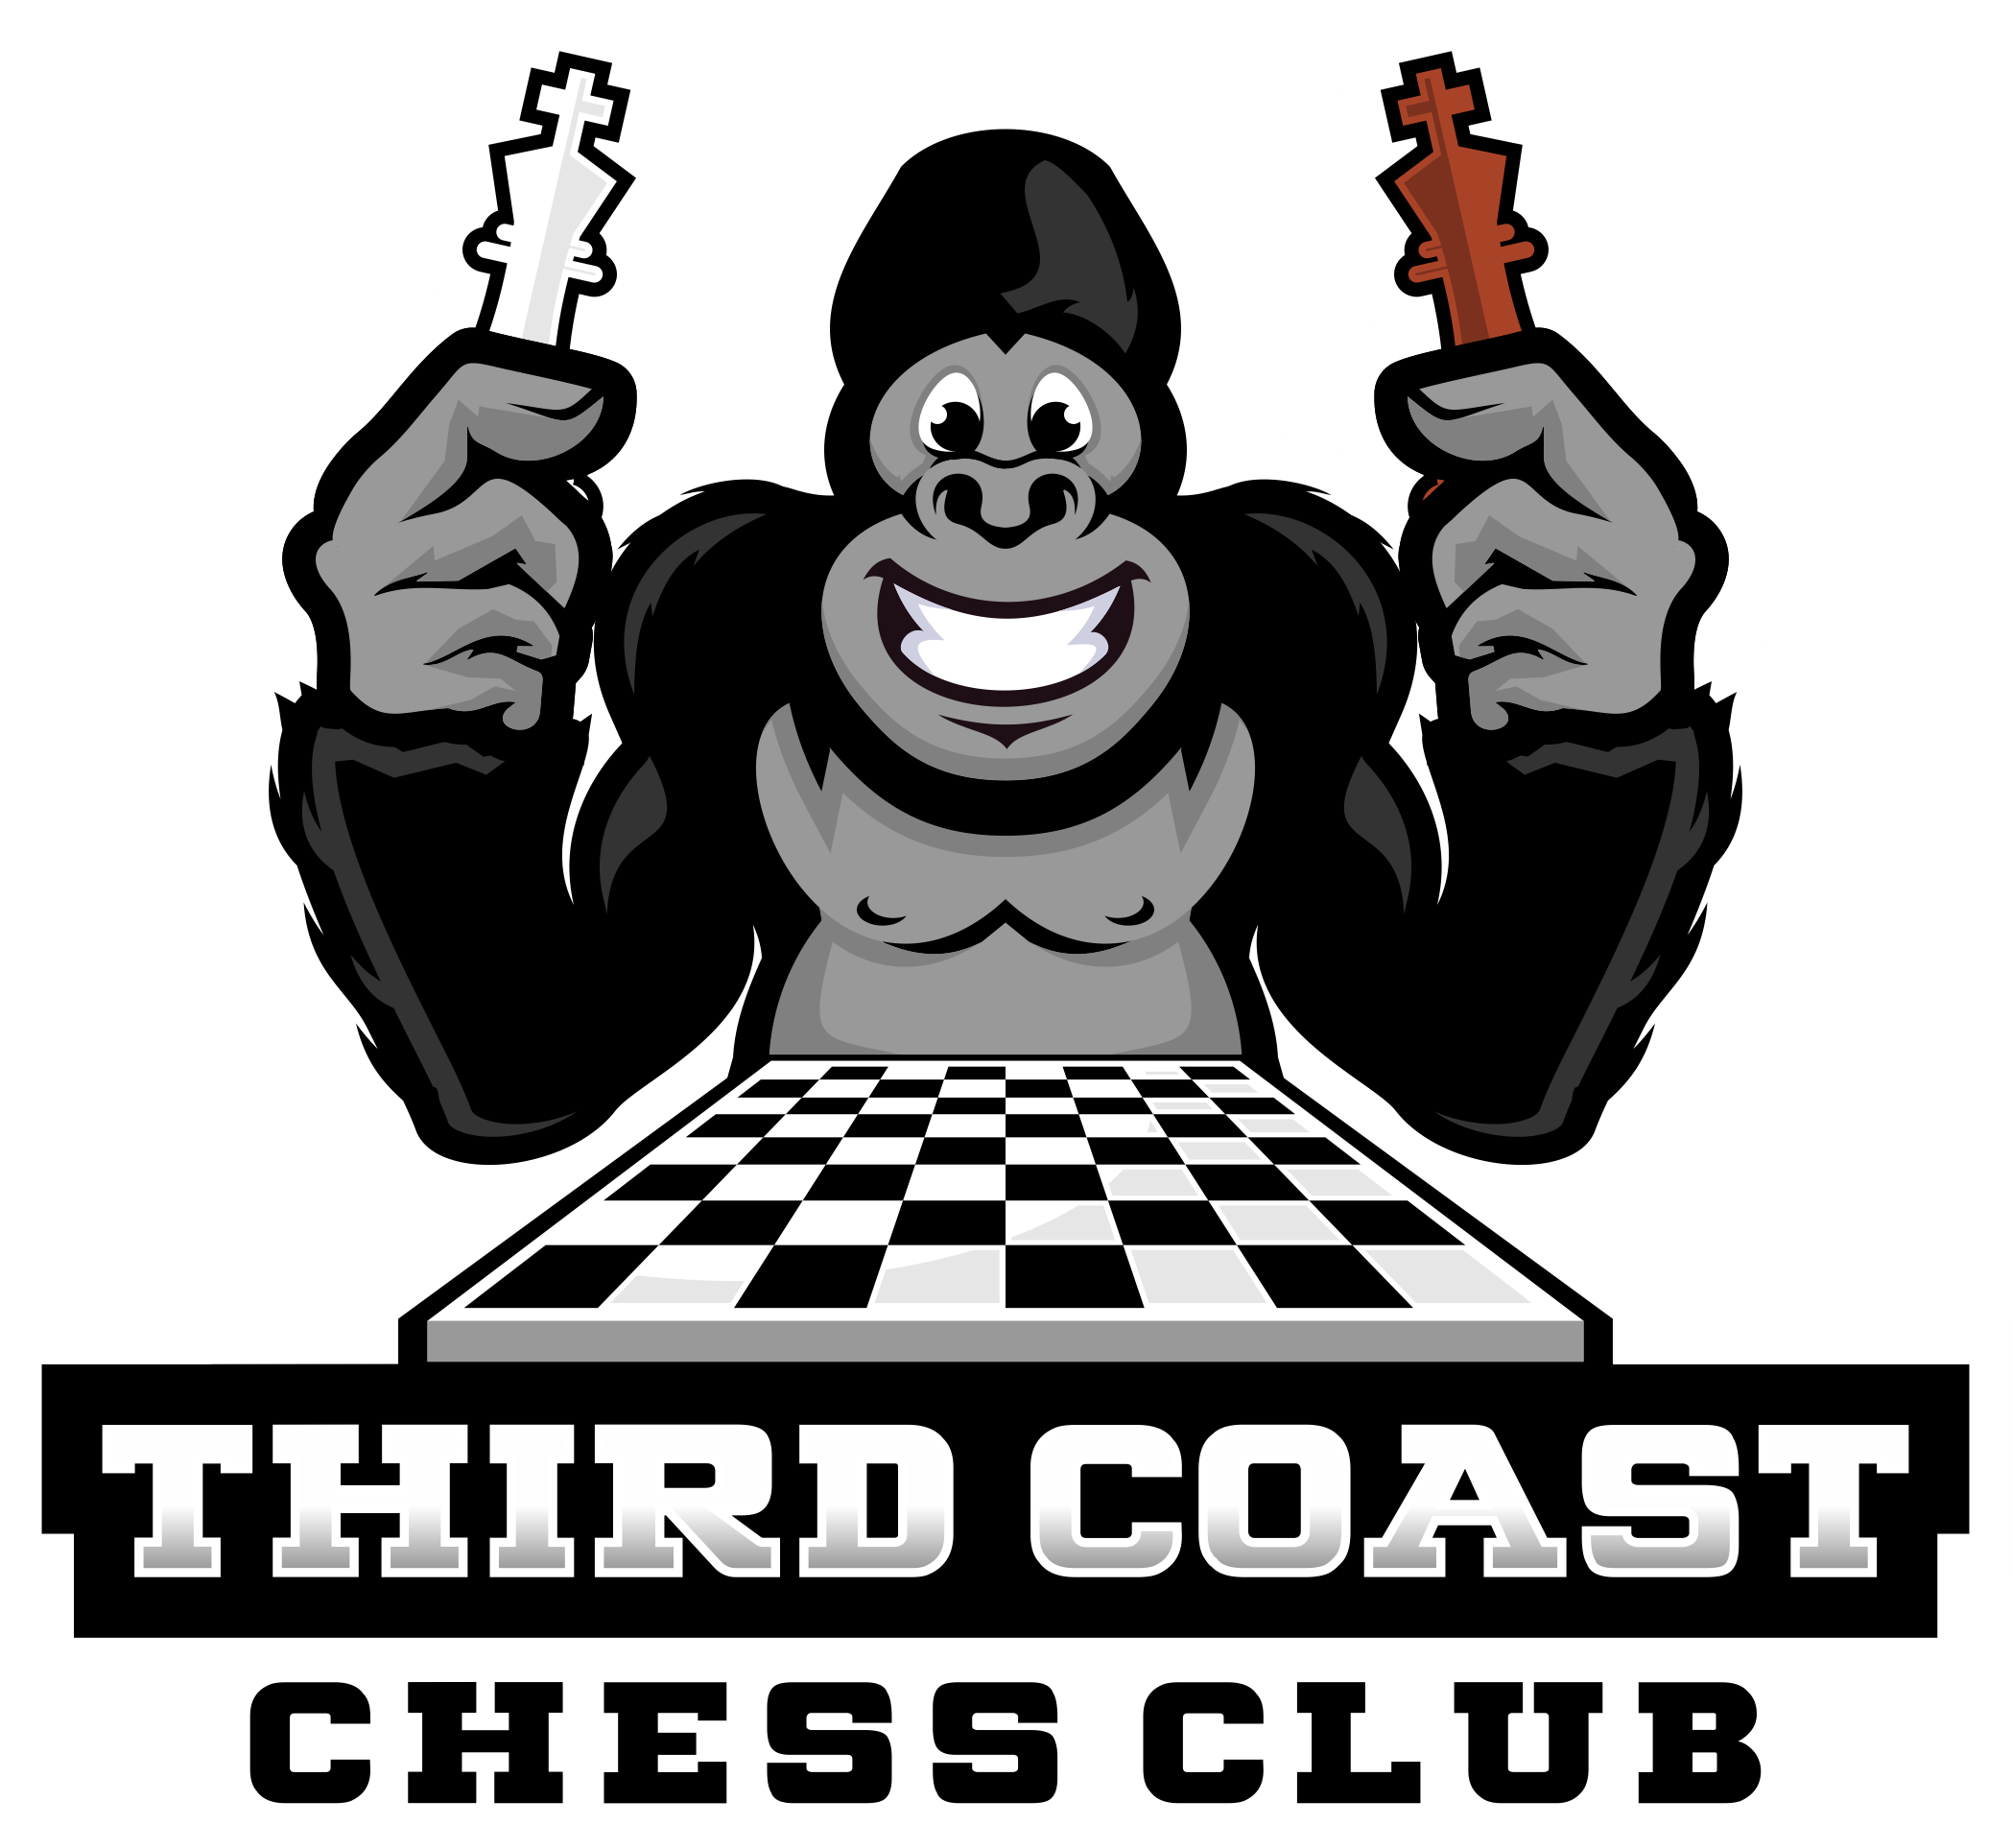 Third Coast Chess Club